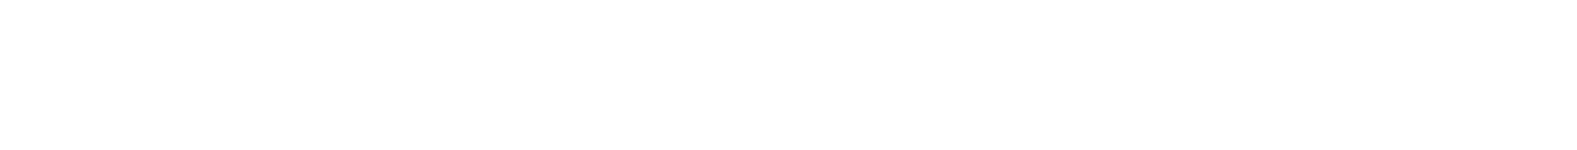 Abercrombie & Fitch Logo groß für dunkle Hintergründe (transparentes PNG)